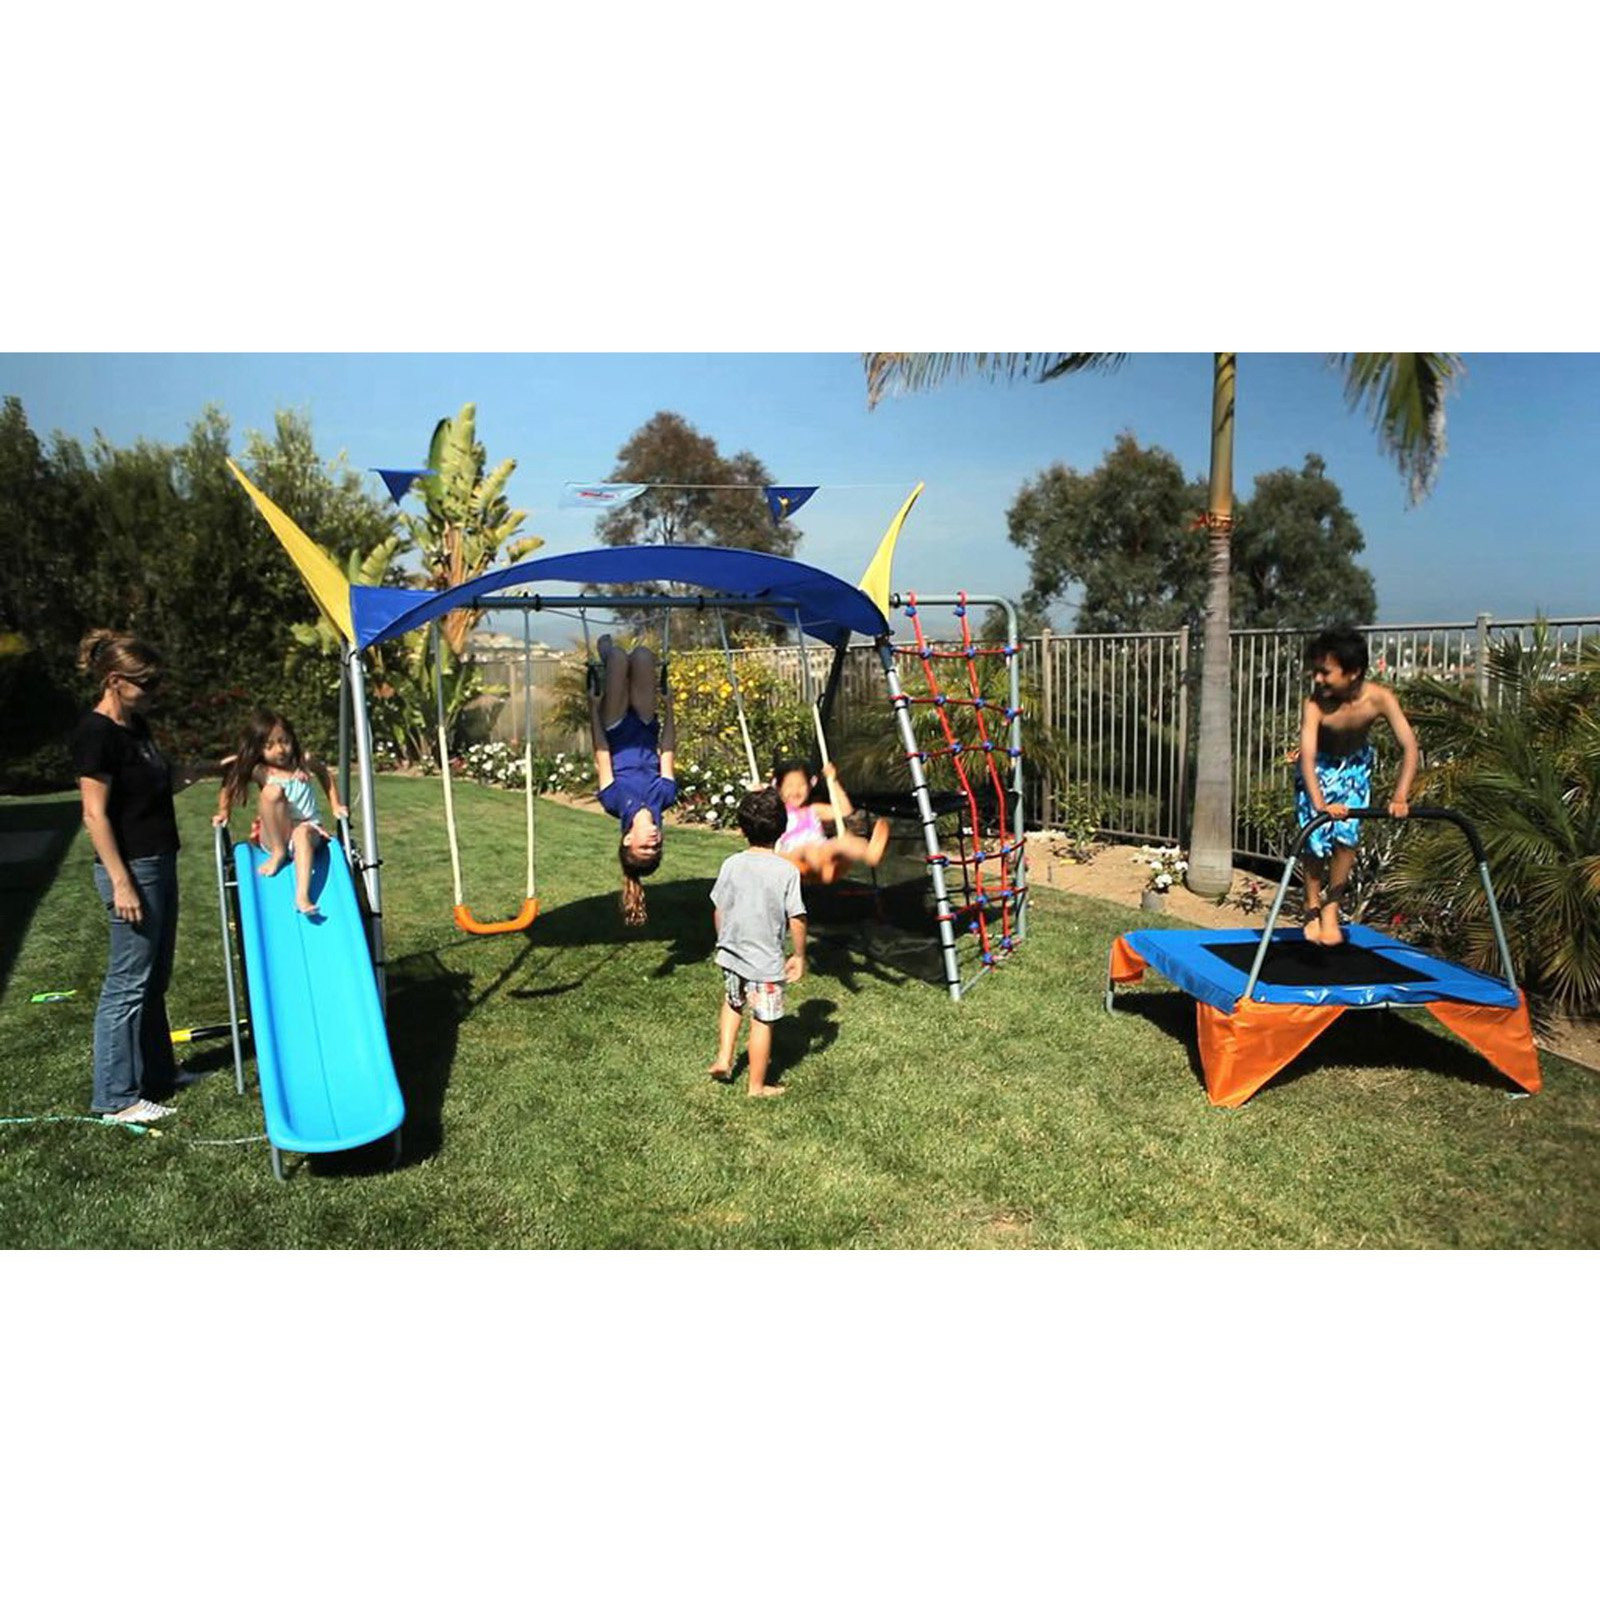 Iron Kids Swing Sets
 IronKids Premier 550 Fitness Playground Swing Sets at